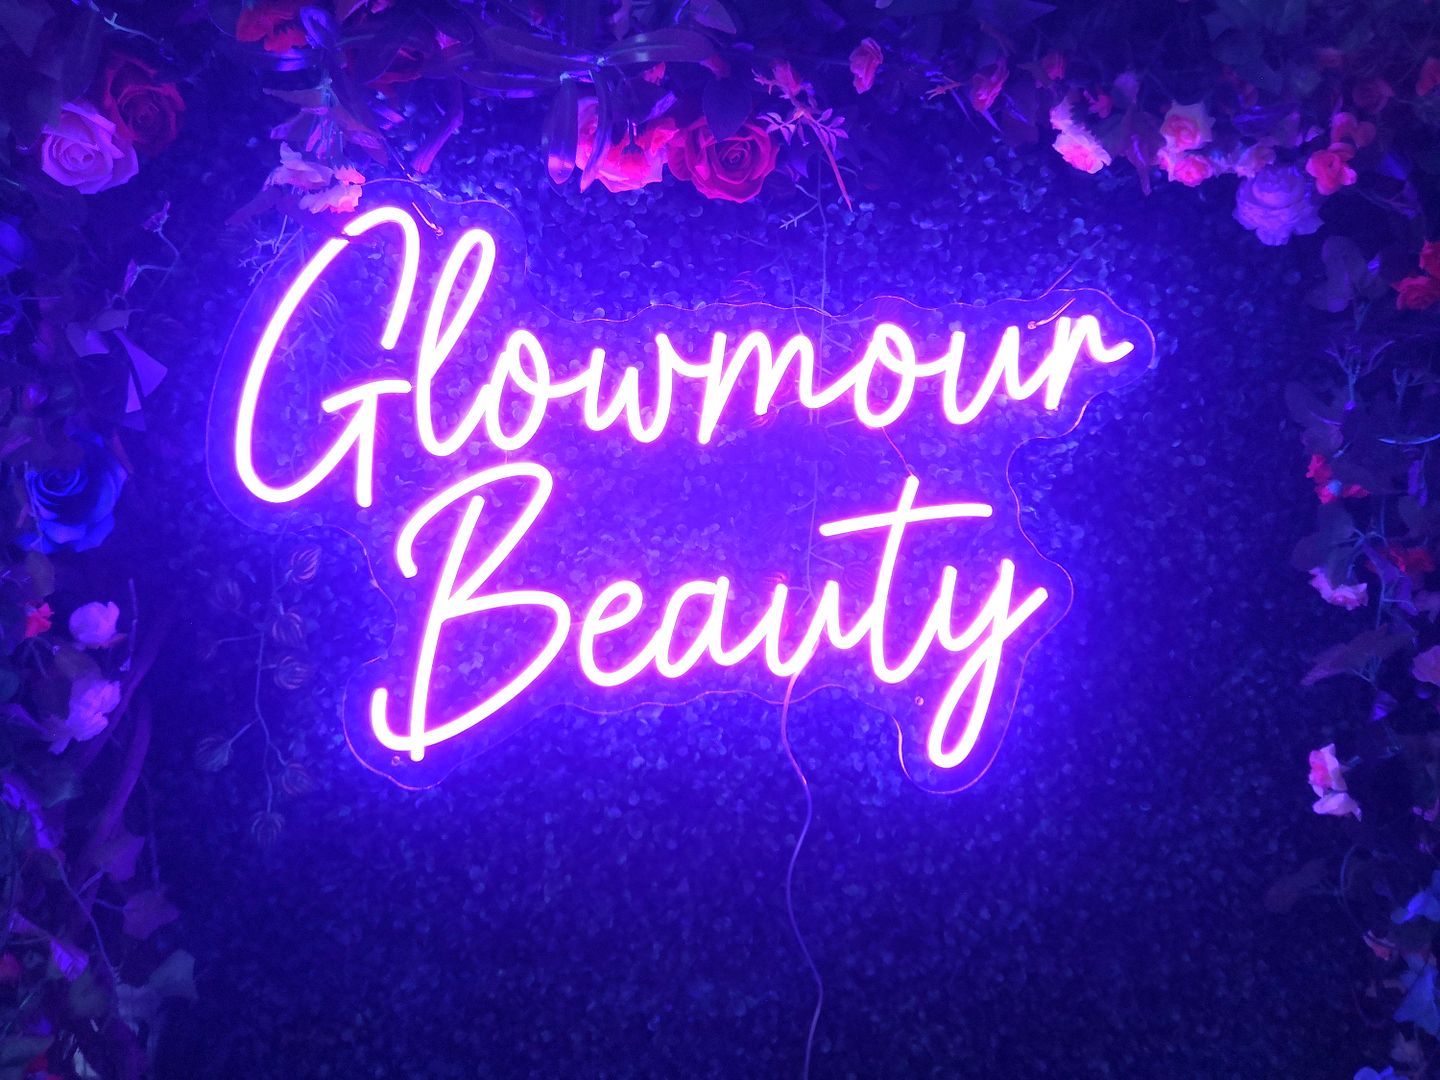 Glowmour Beauty Neon Sign